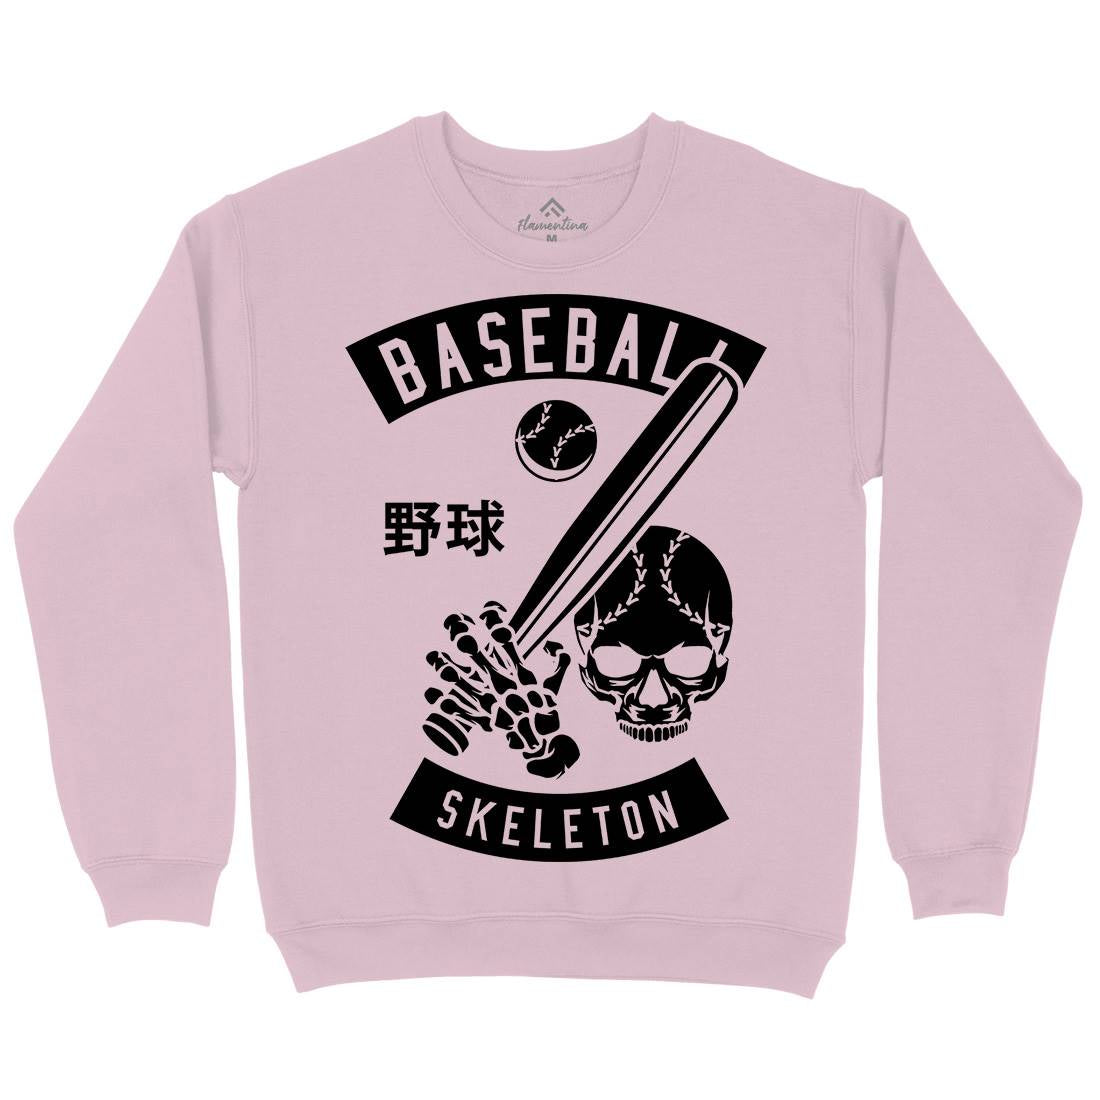 Baseball Skeleton Kids Crew Neck Sweatshirt Sport B489